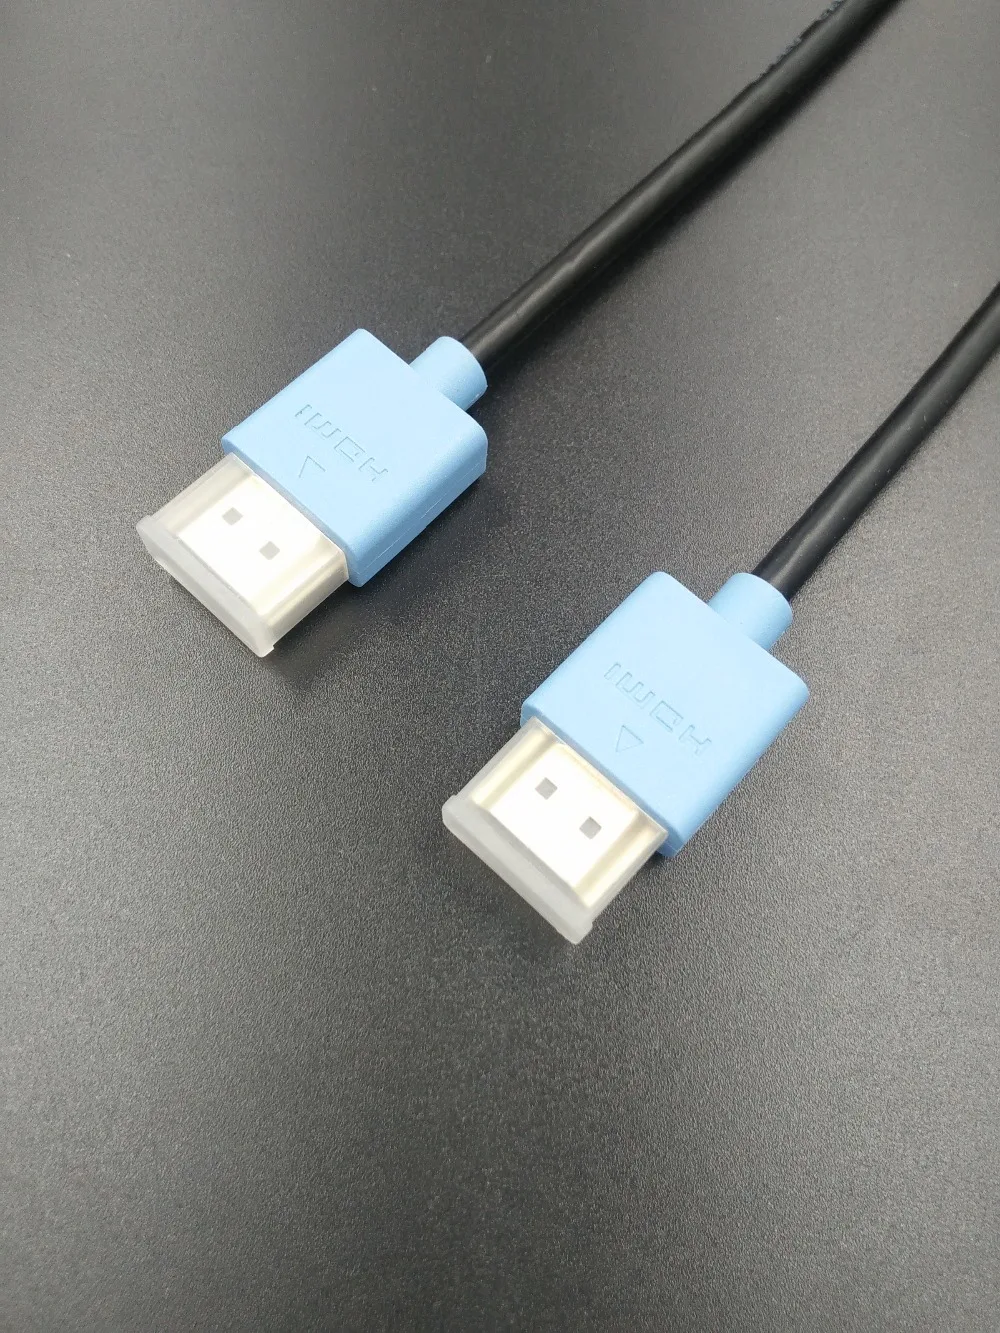 Тонкий HDMI кабель с Ethernet 1 М 5 м 2 3 10 4 для HD TV/Xbox 360 / PS3 Playstation SkyHD|hdmi flat cable|cable hdmi 5mcable m |